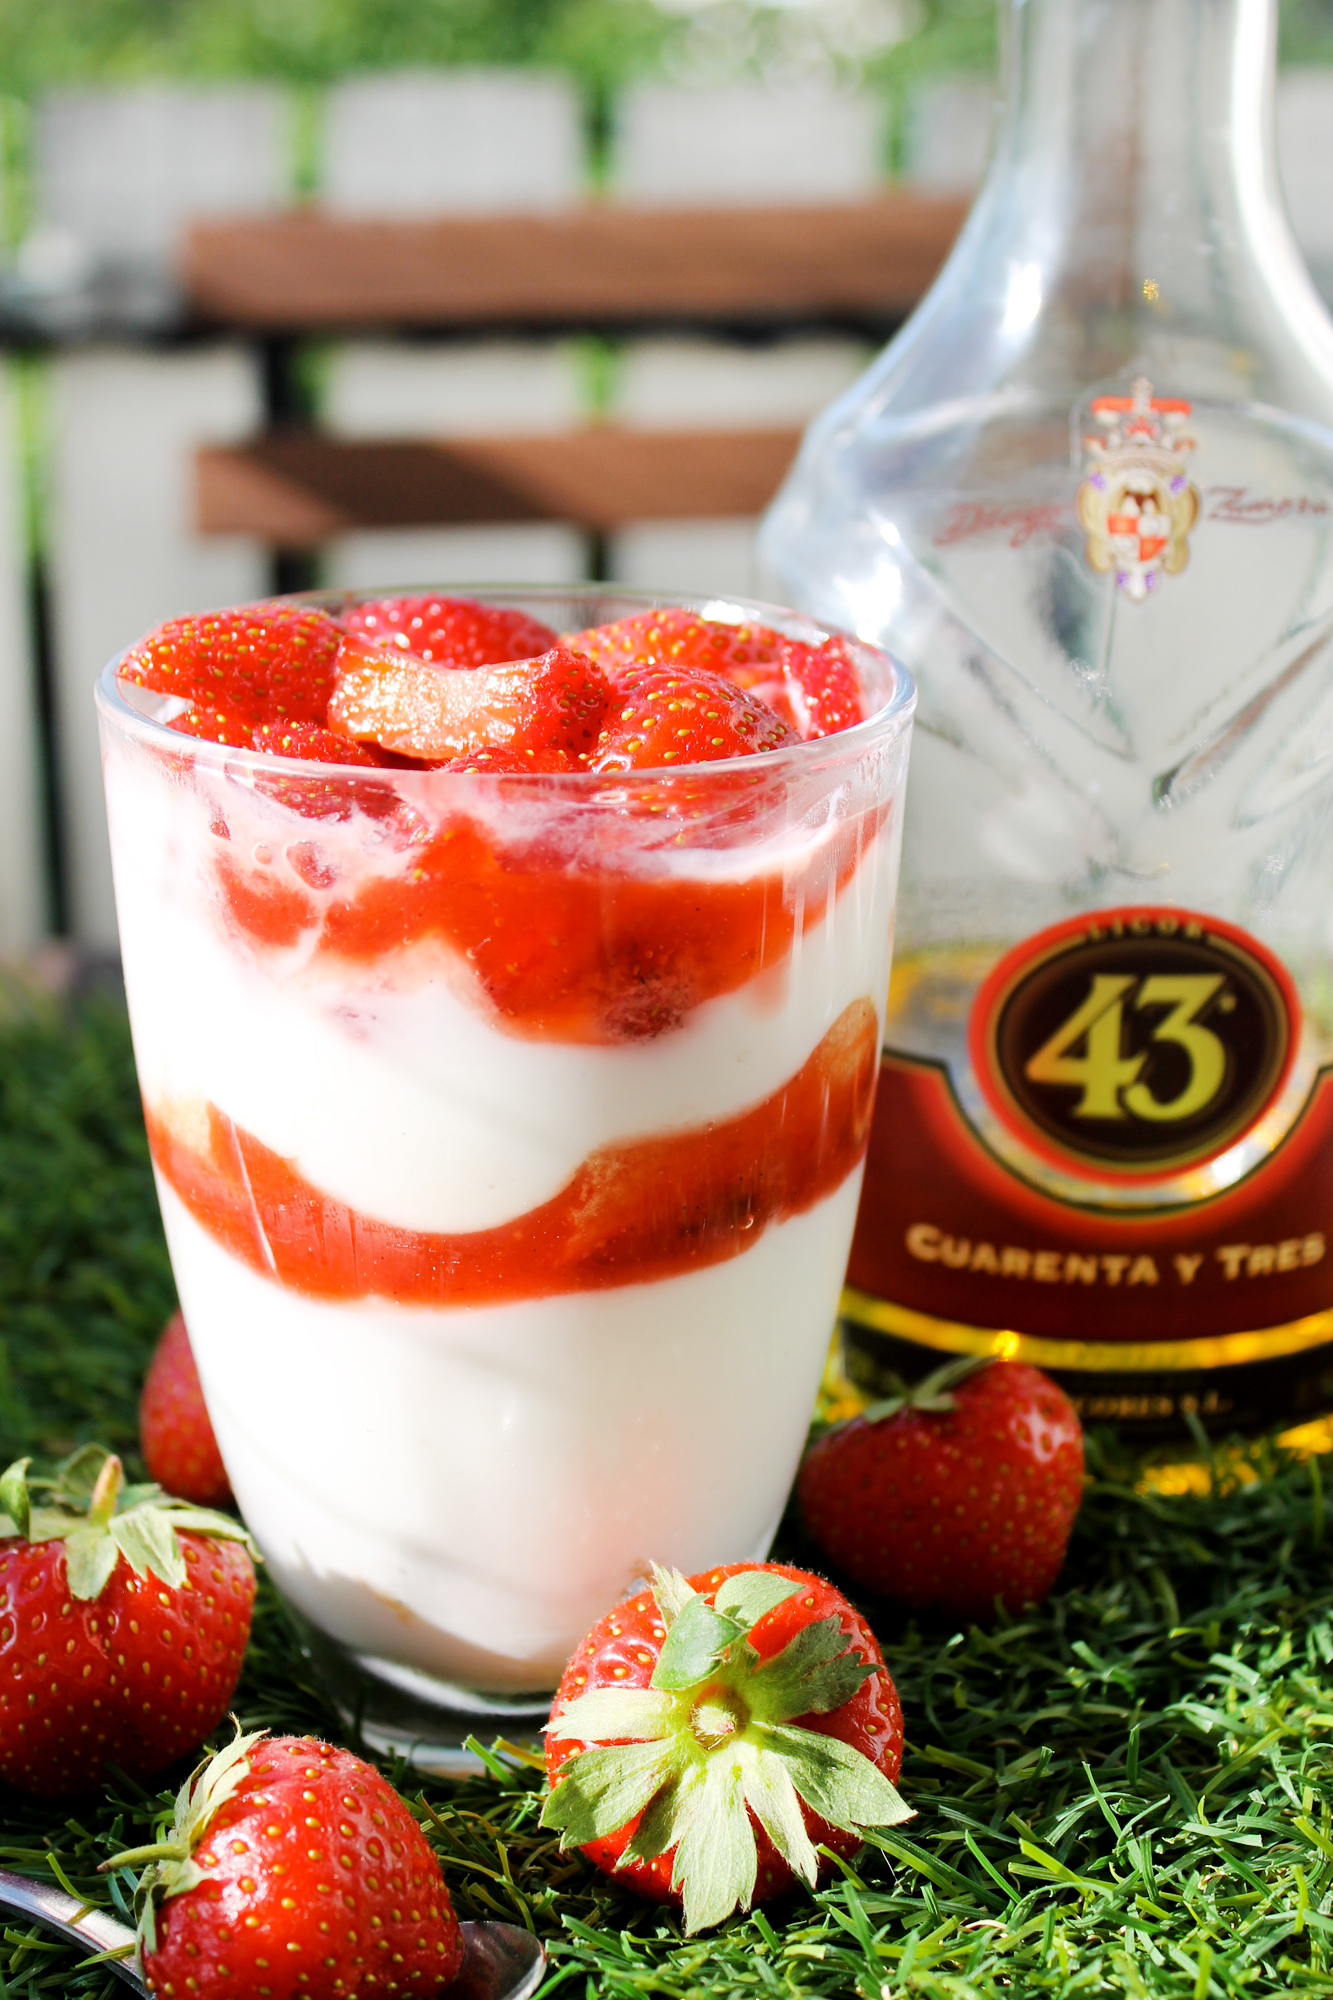 Erdbeer Likör 43 Joghurt Dessert | Stadt-Land-Food